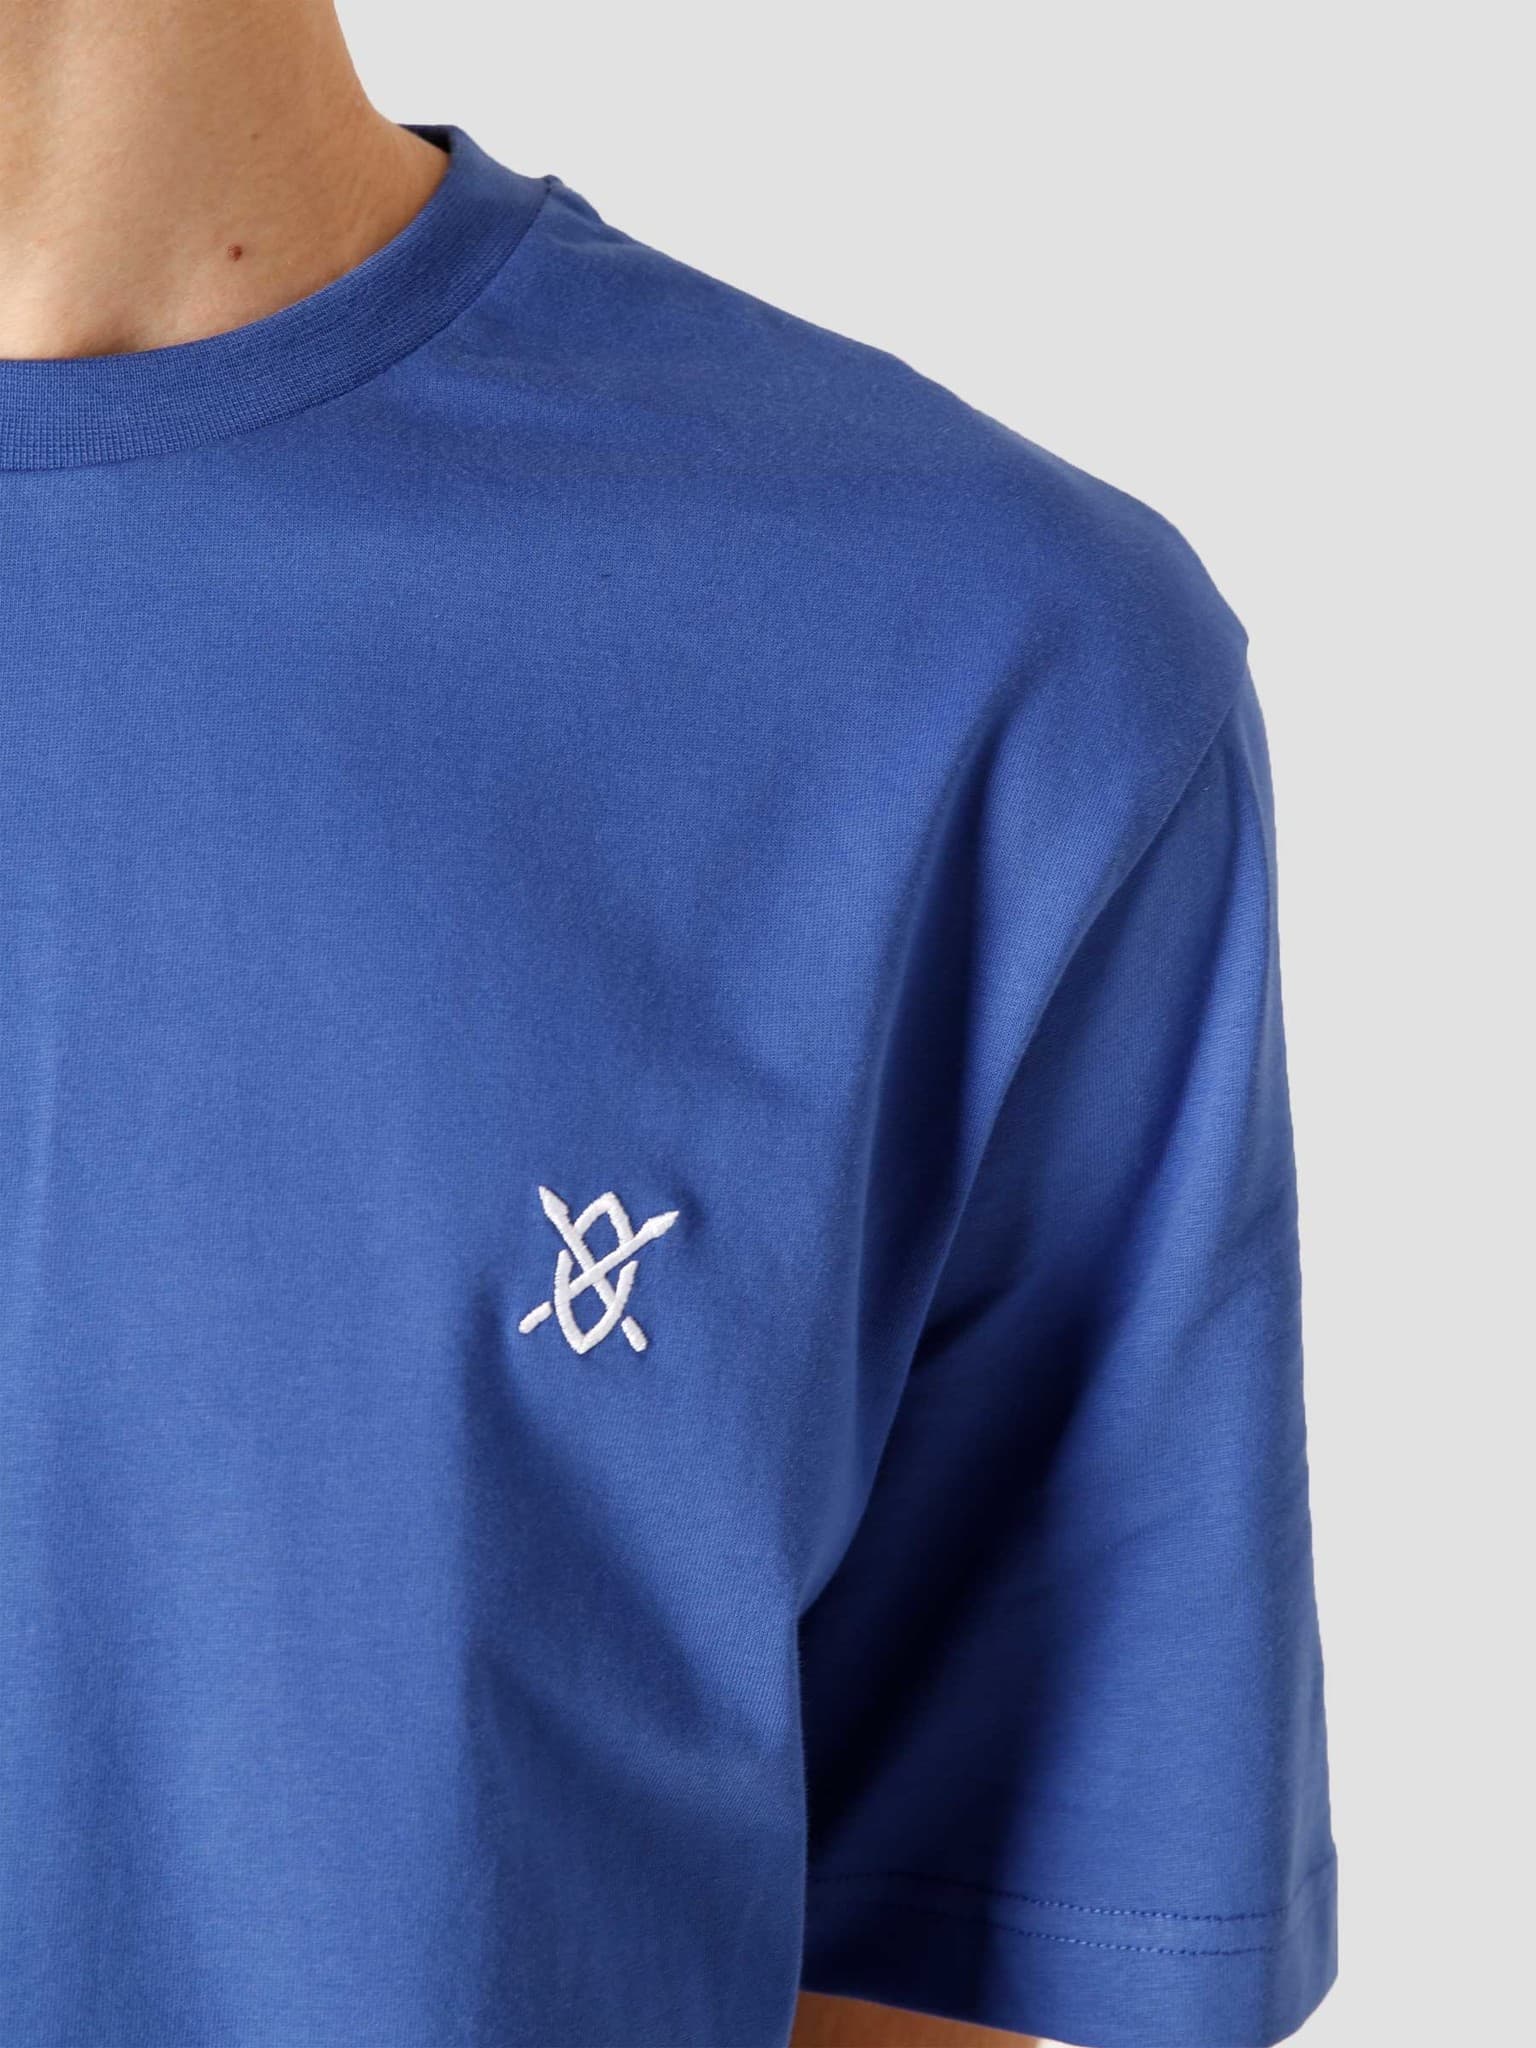 Eshield T-Shirt Mazarine Blue 2111006